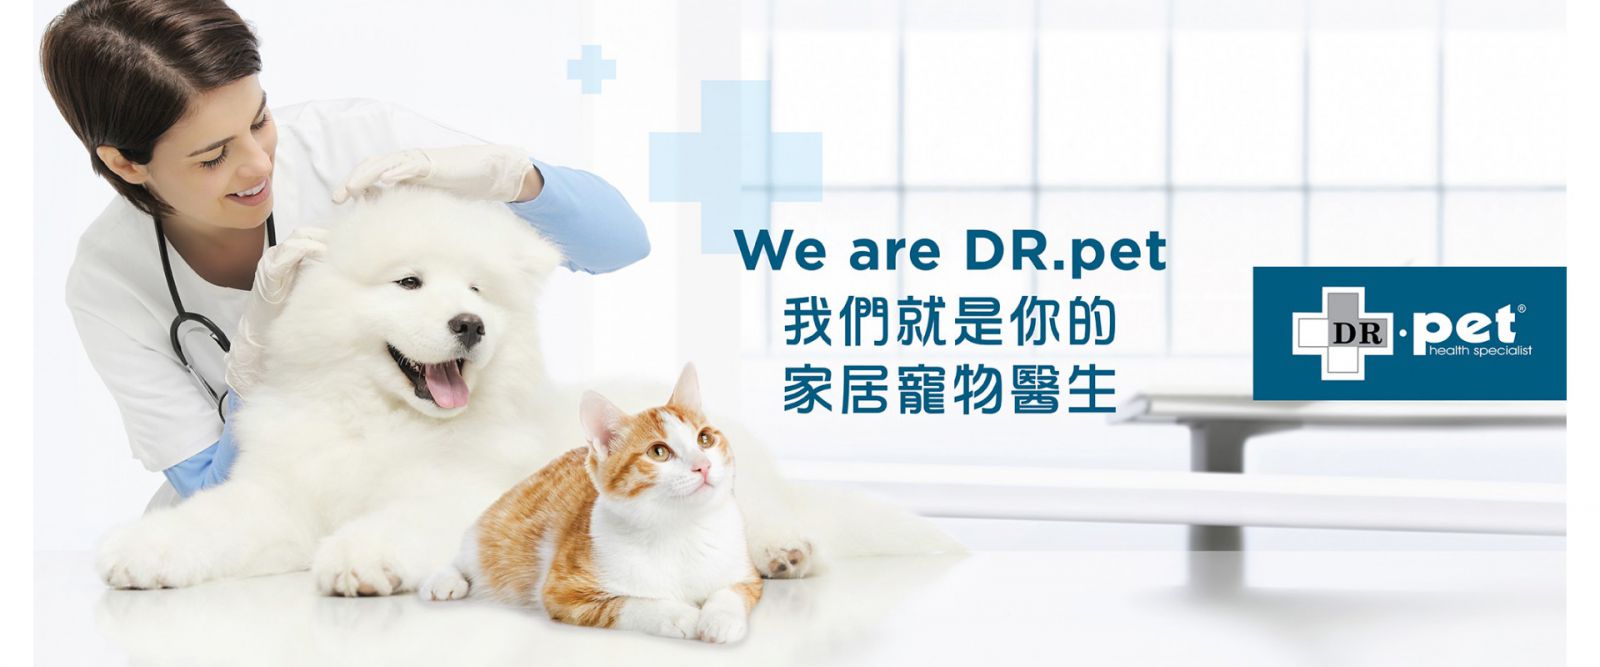 Dr. Pet | 3合1深海磷蝦油 237ml (貓狗食用) - SugarPet